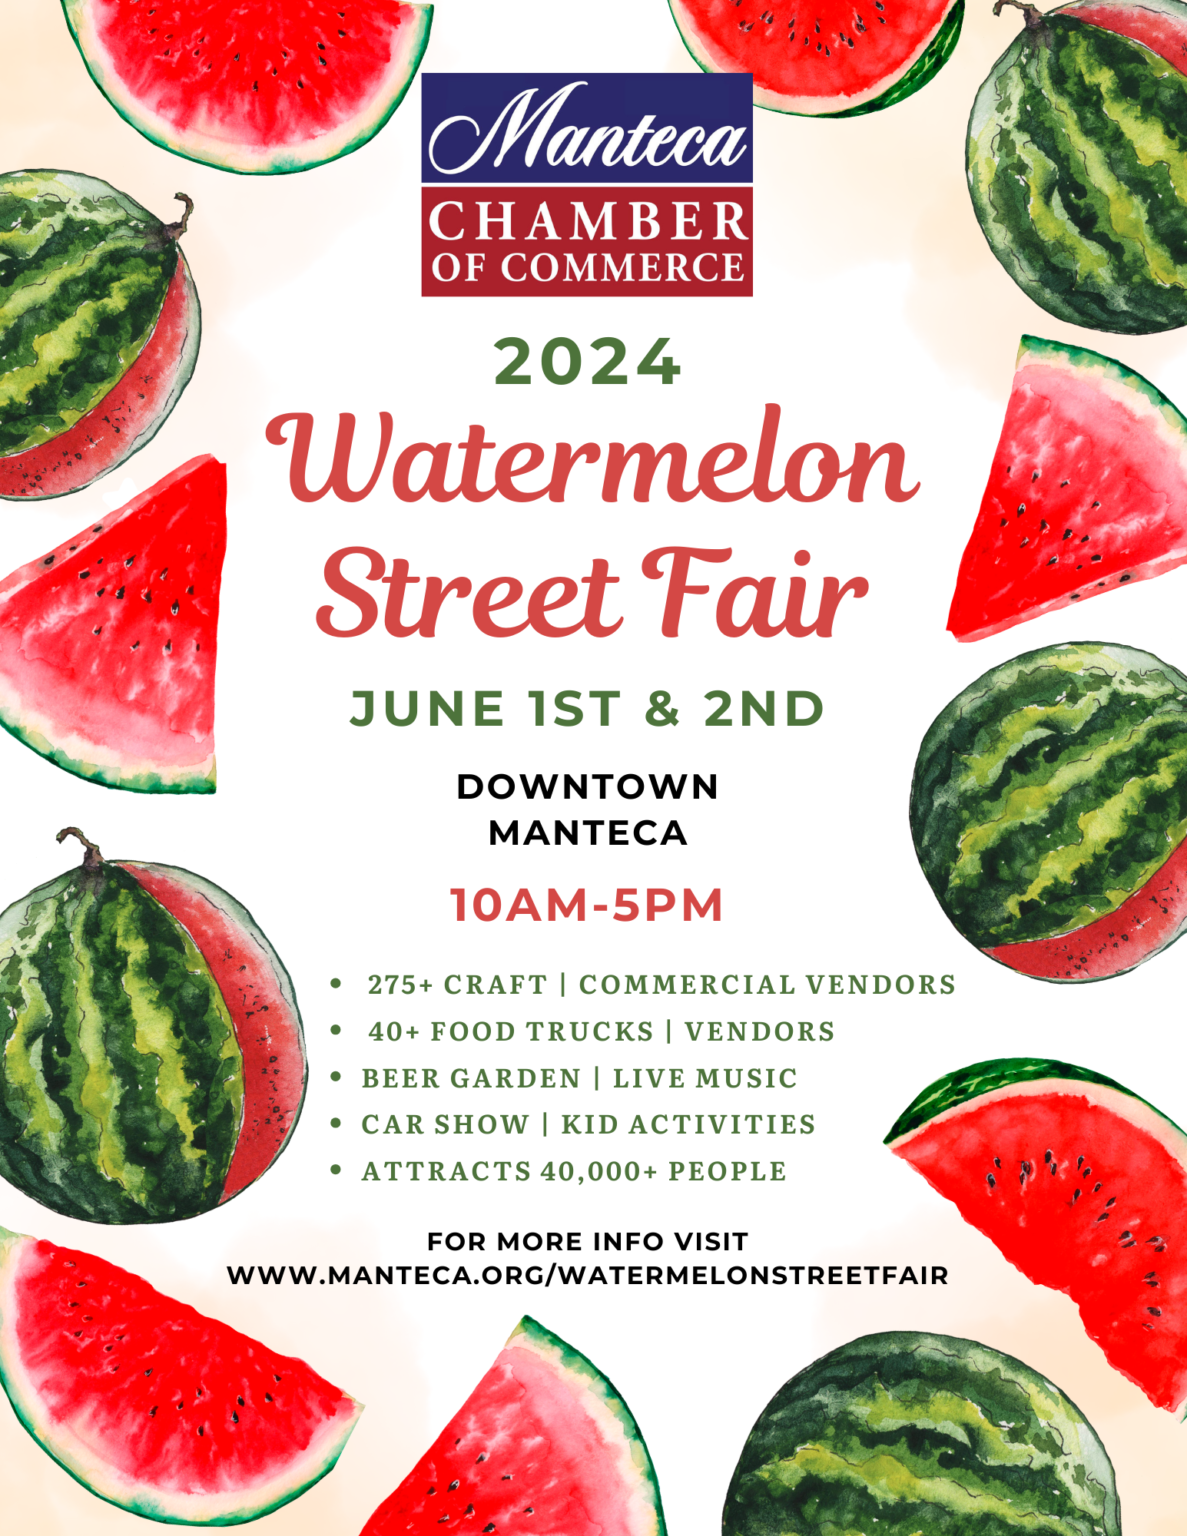 Watermelon Street Fair Manteca Chamber of Commerce